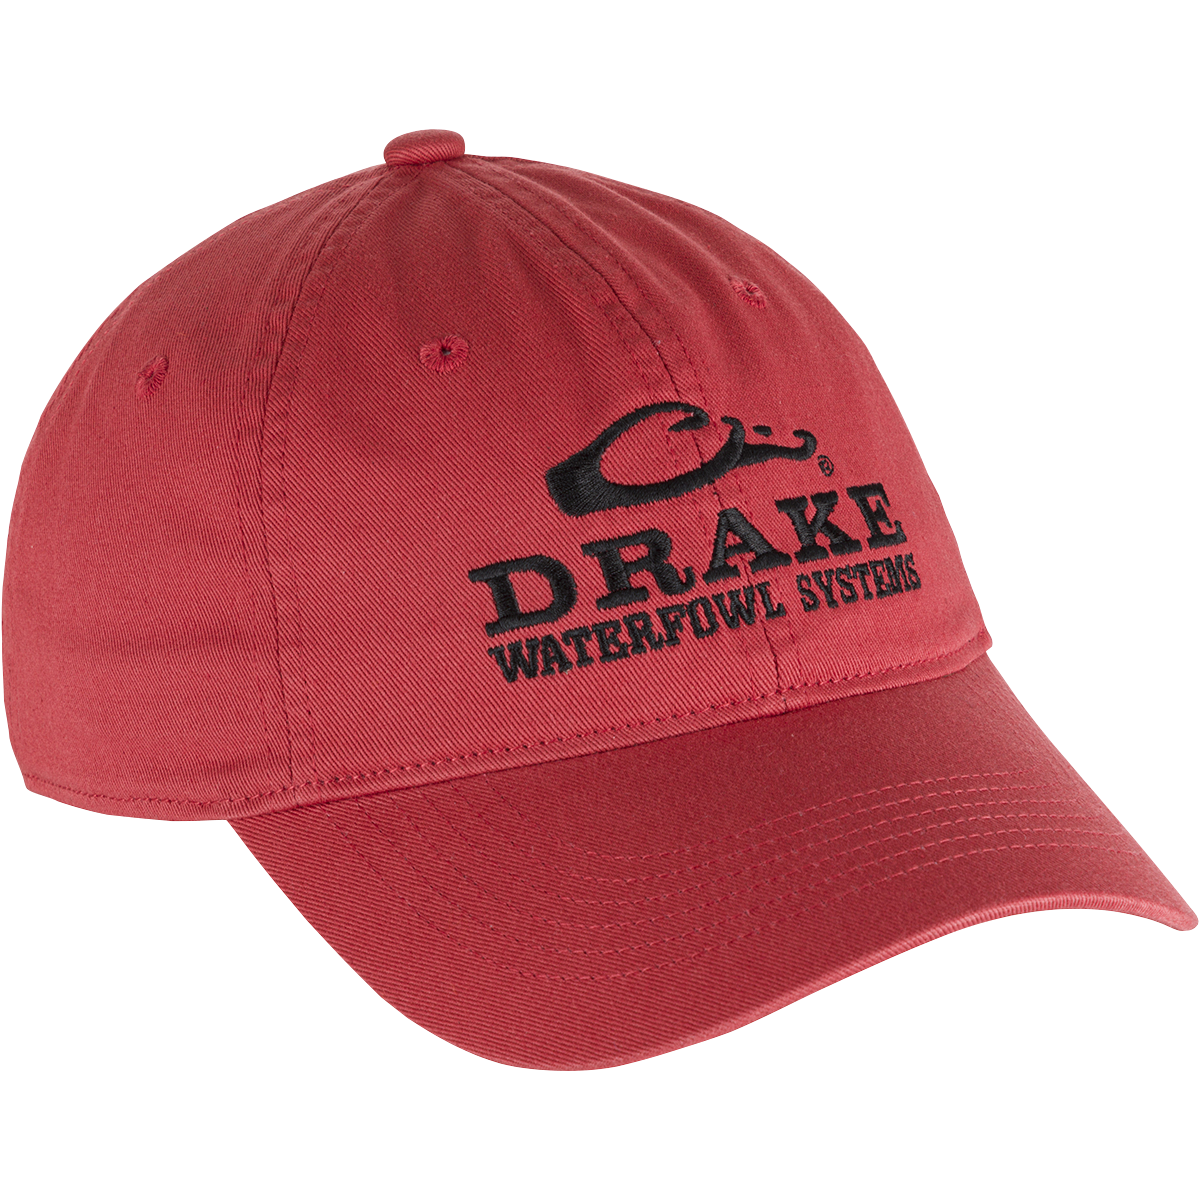 Stylish Red Cotton SnapBack Caps & Hats